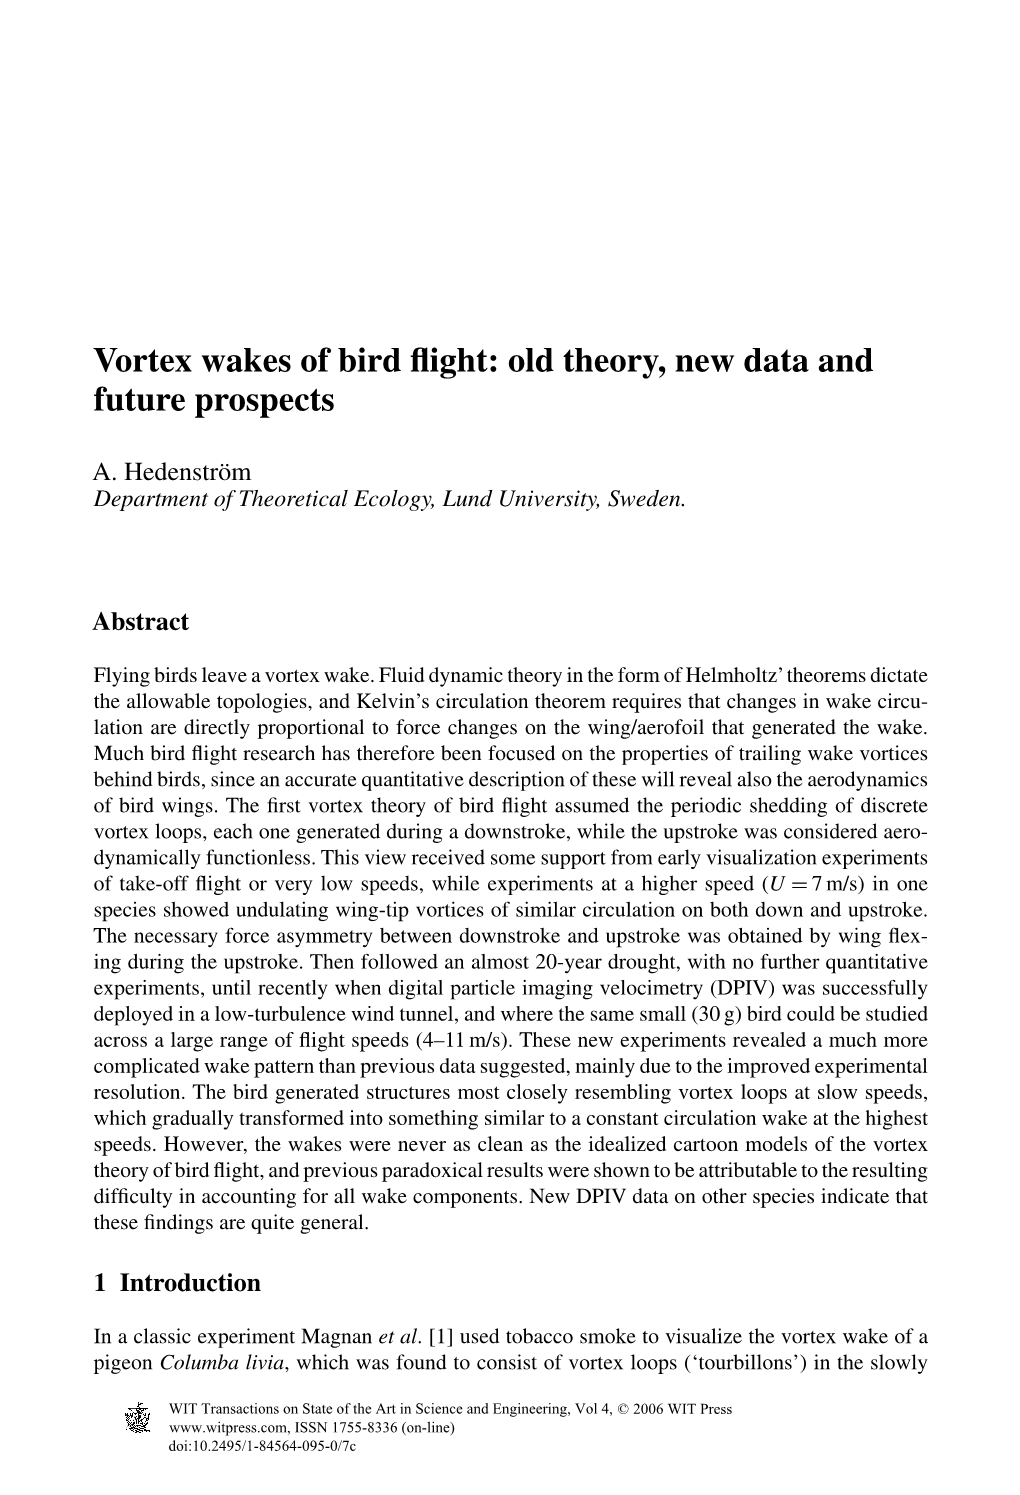 Vortex Wakes of Bird Flight: Old Theory, New Data and Future Prospects